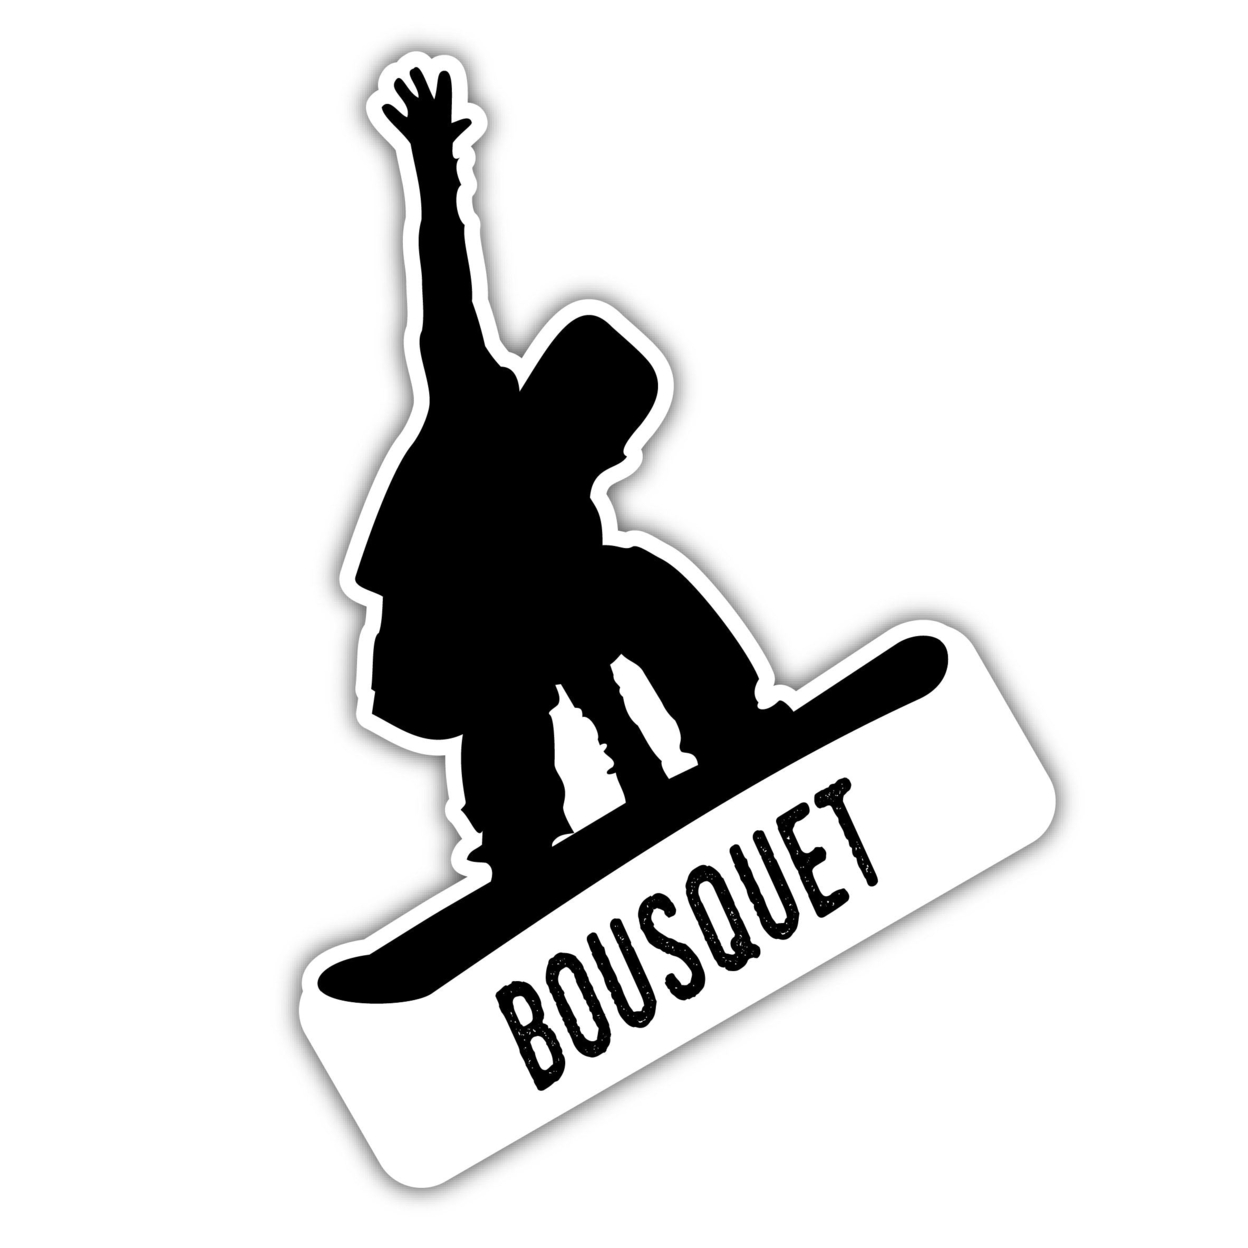 Bousquet Massachusetts Ski Adventures Souvenir Approximately 5 X 2.5-Inch Vinyl Decal Sticker Goggle Design